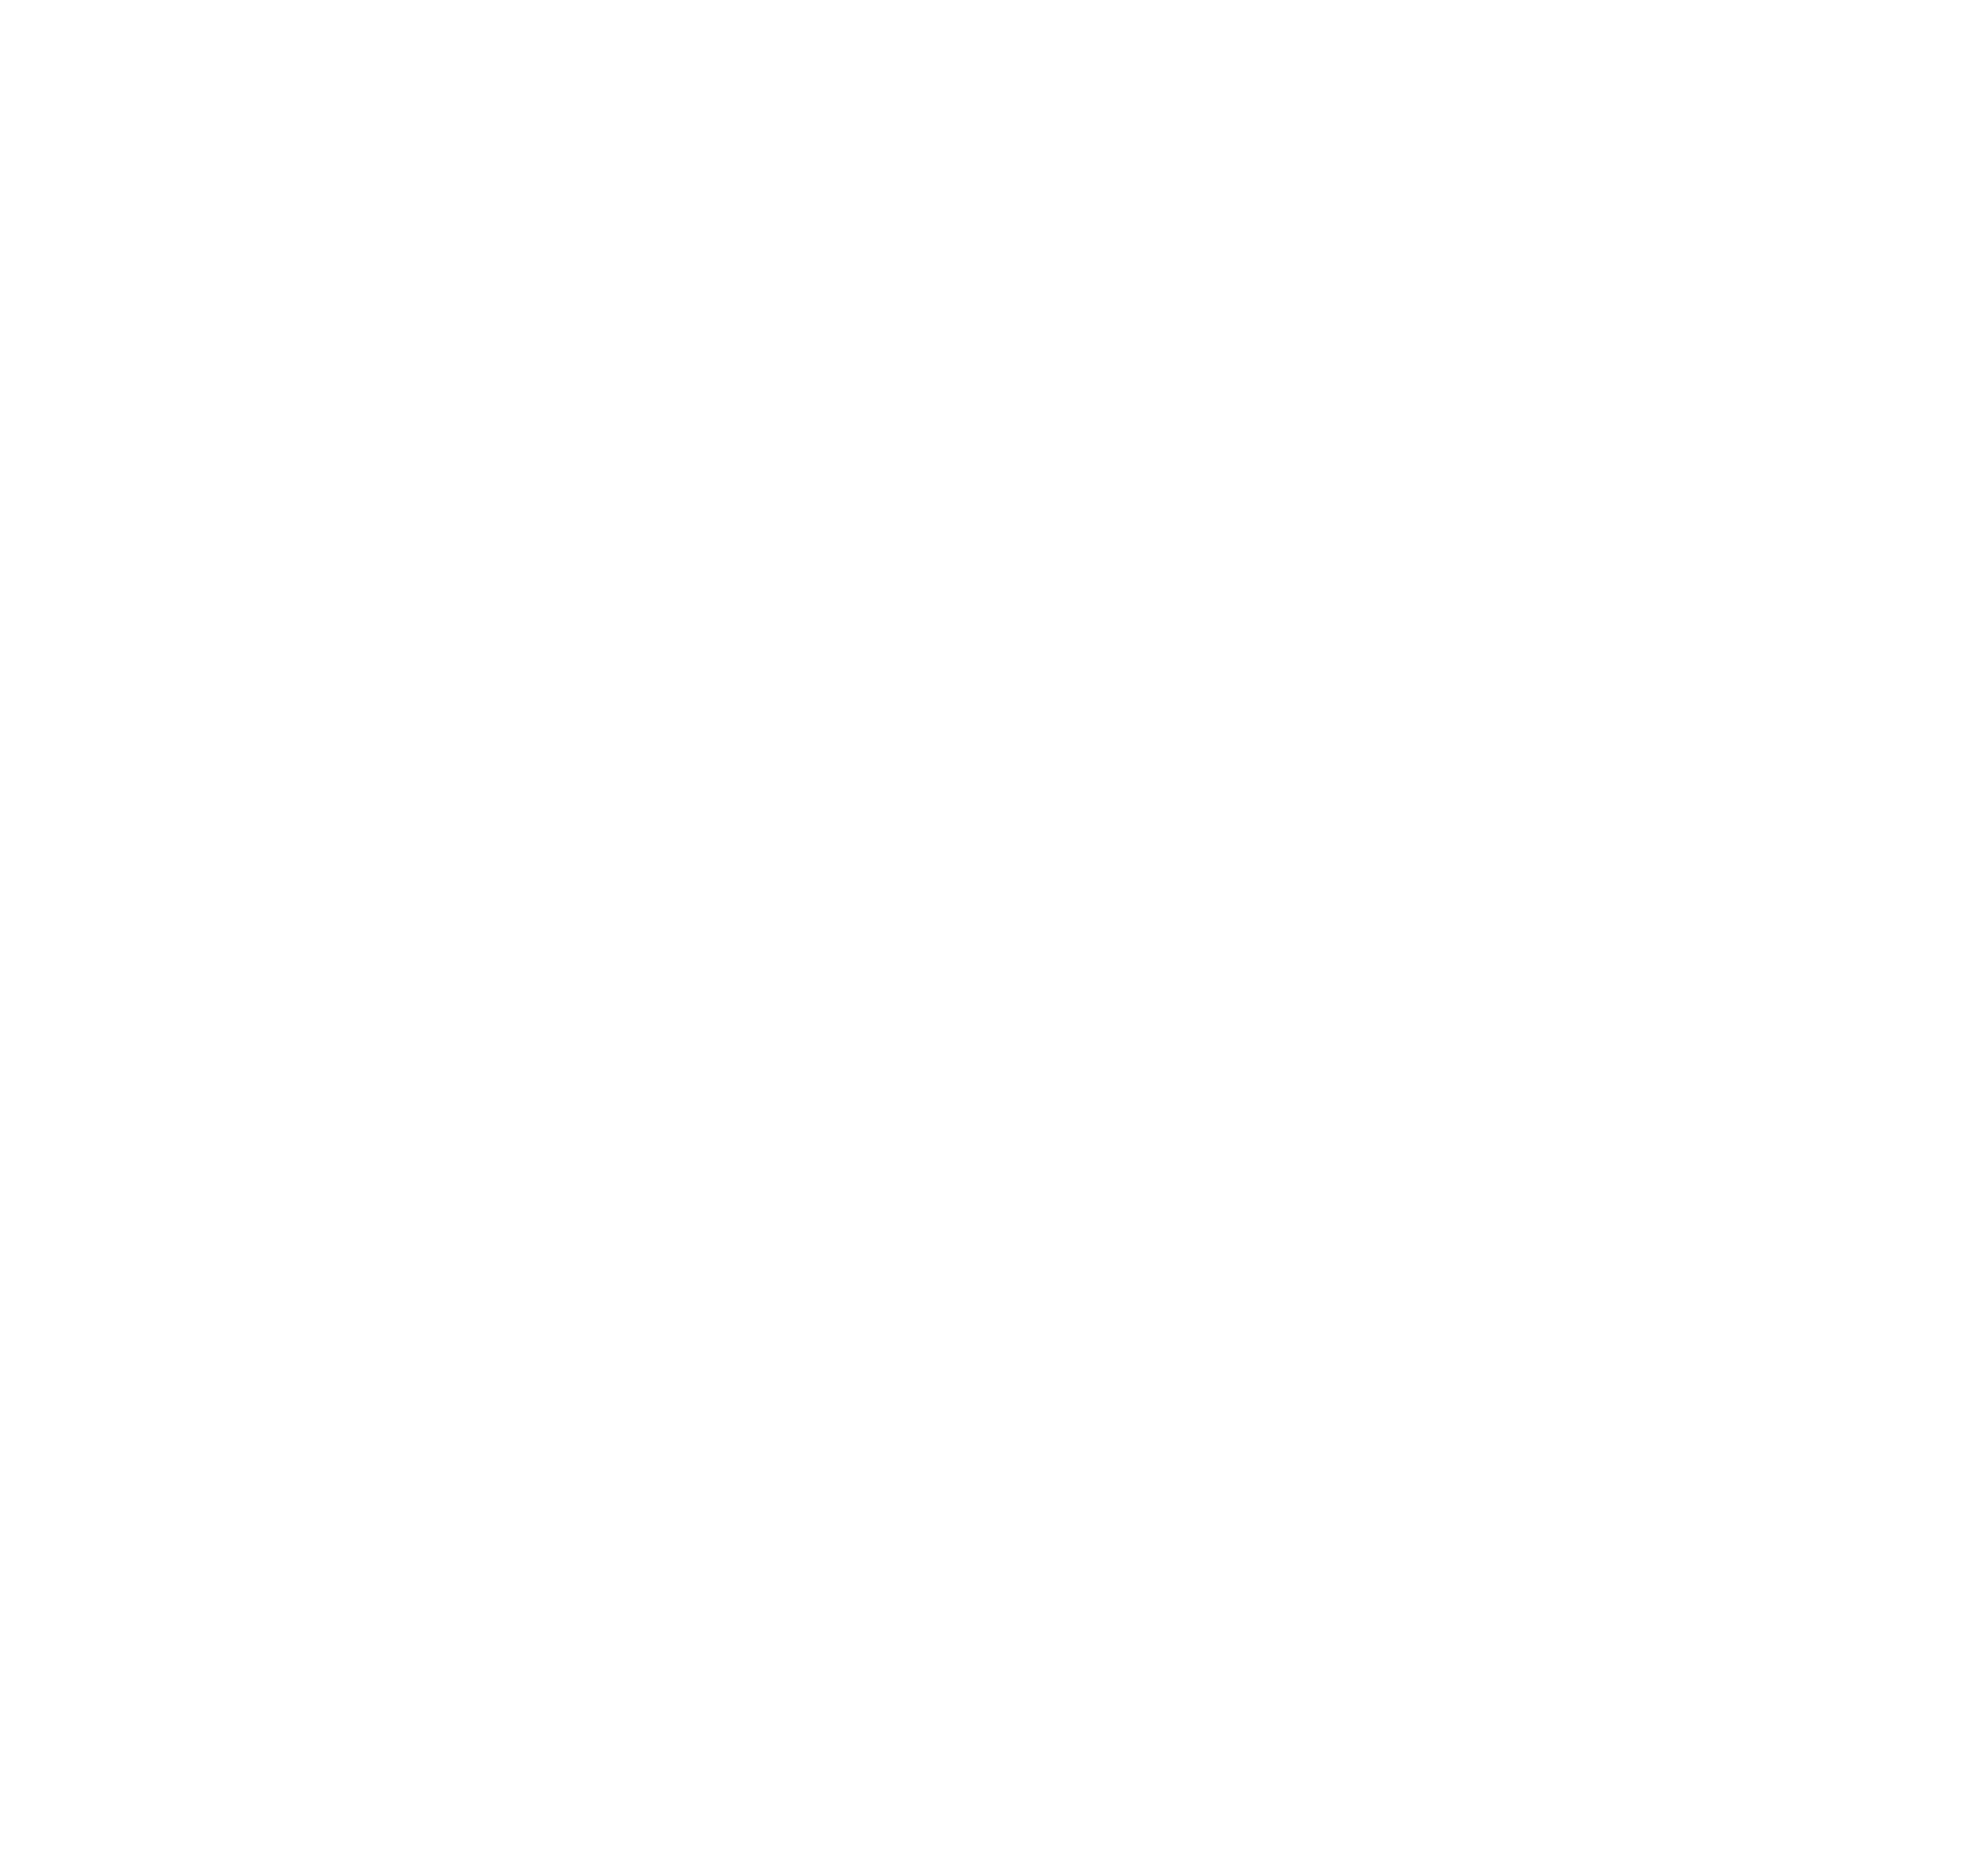 oceano 25 aniversario retina-07